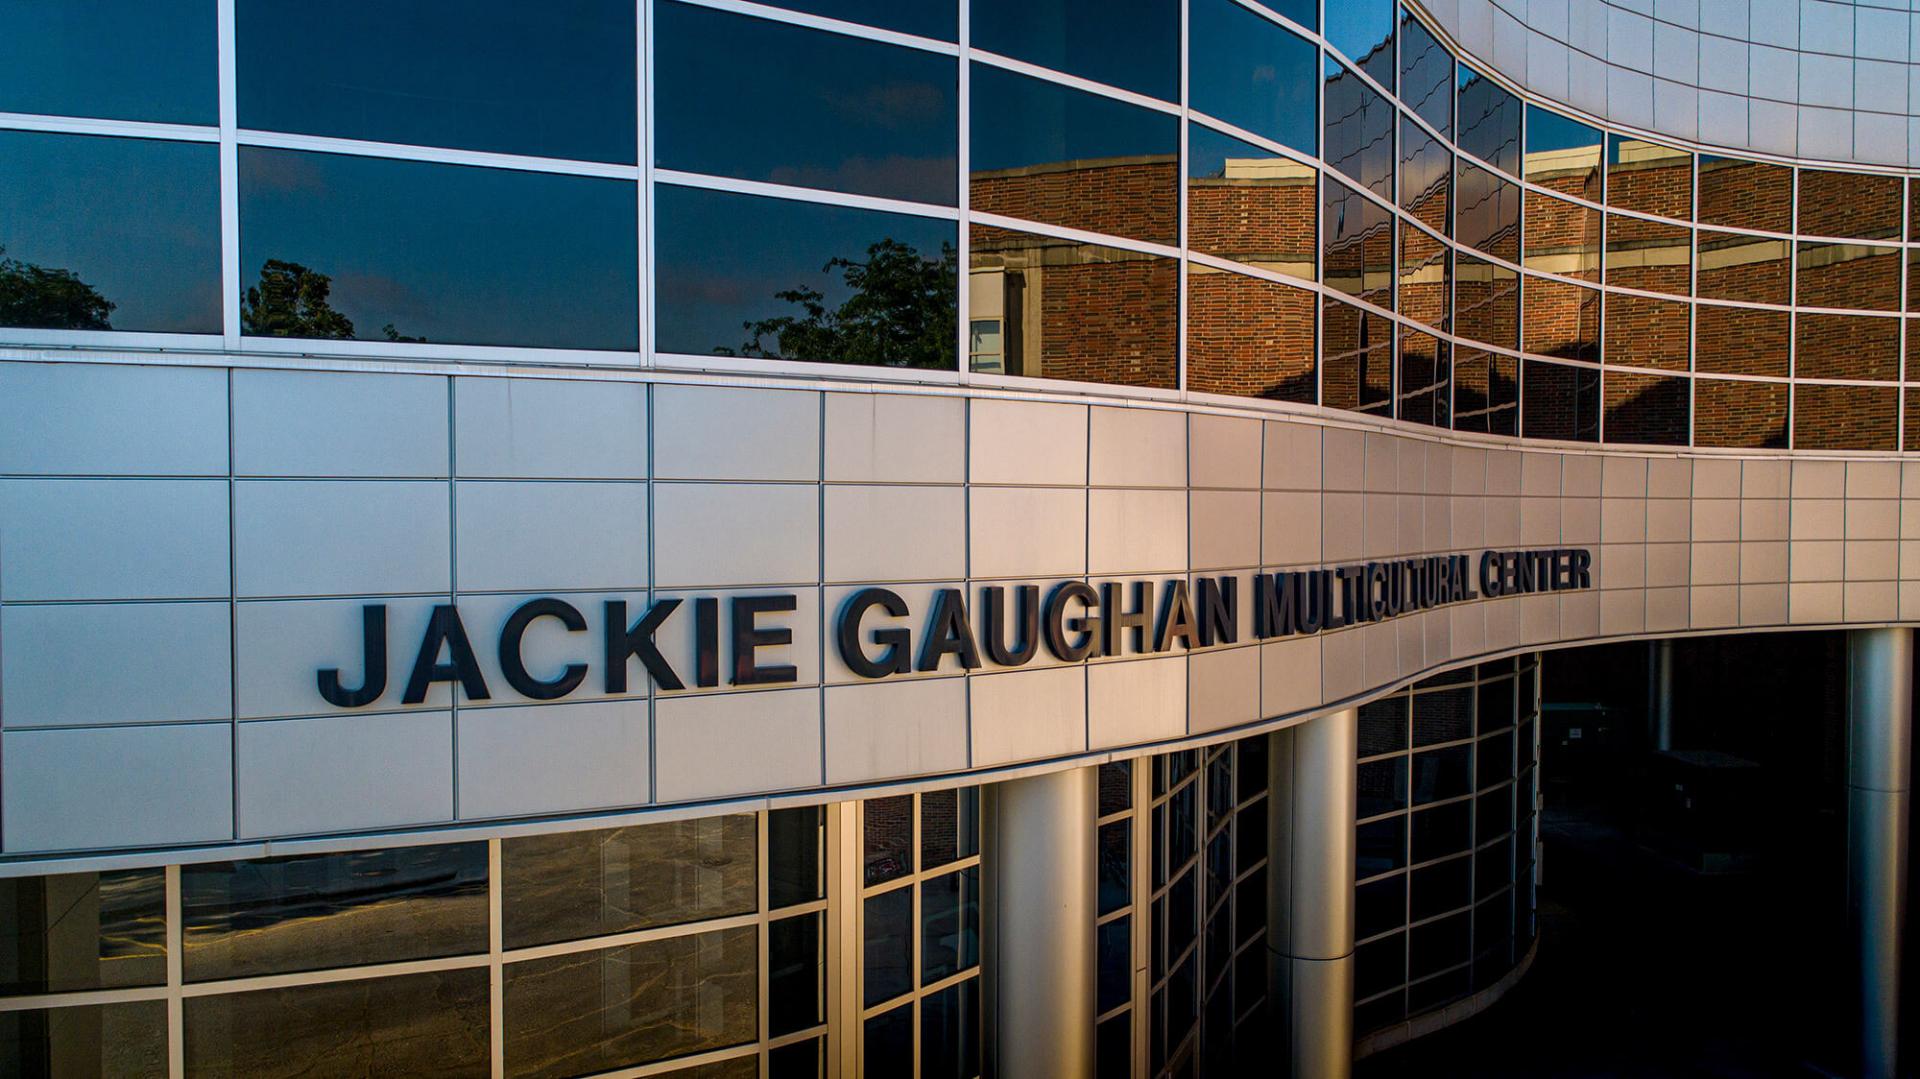 Facade of Jackie Gaughan center